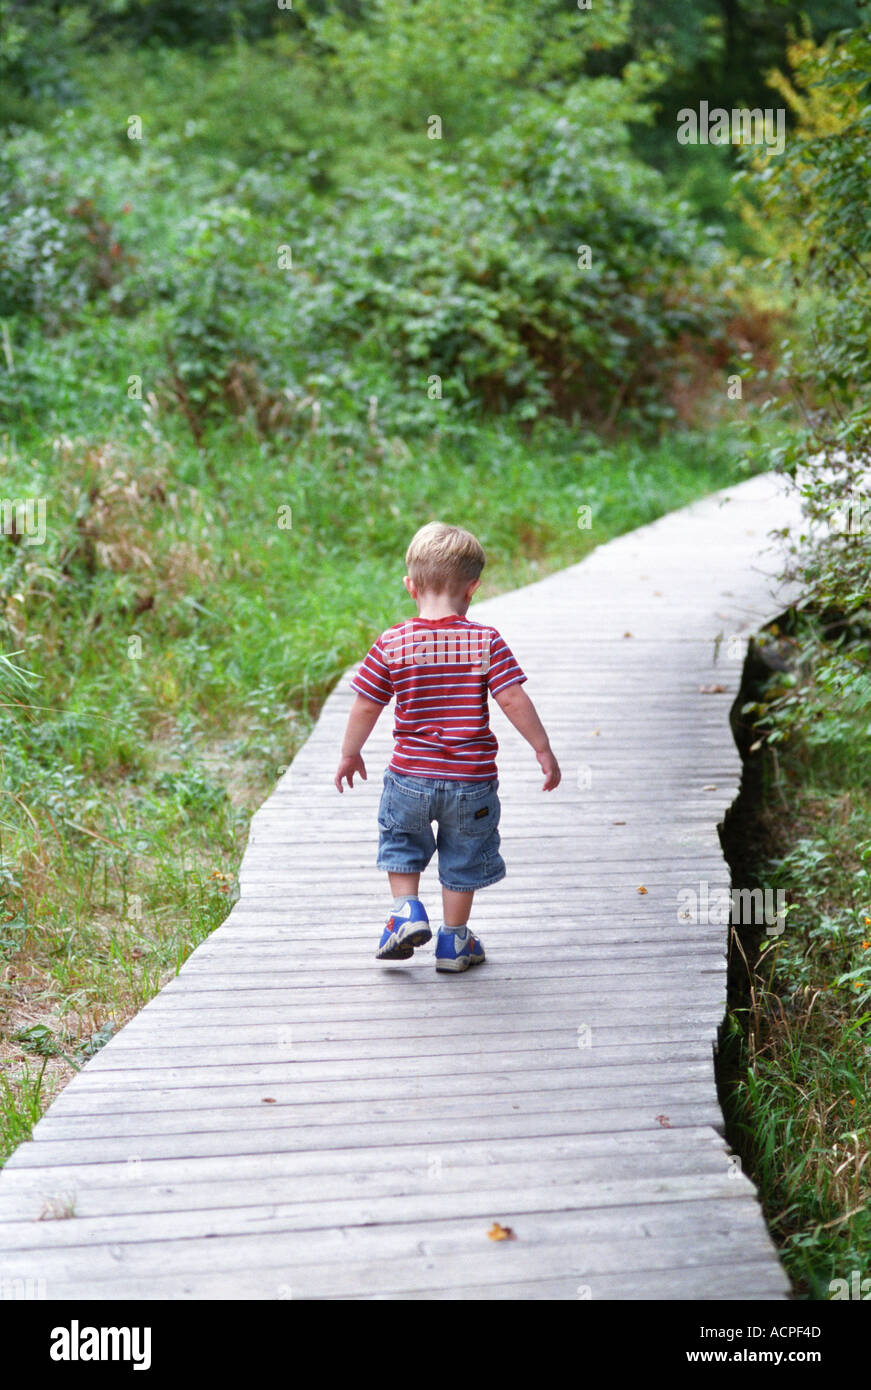 Small boy walking on pathway into future Life Stock Photo